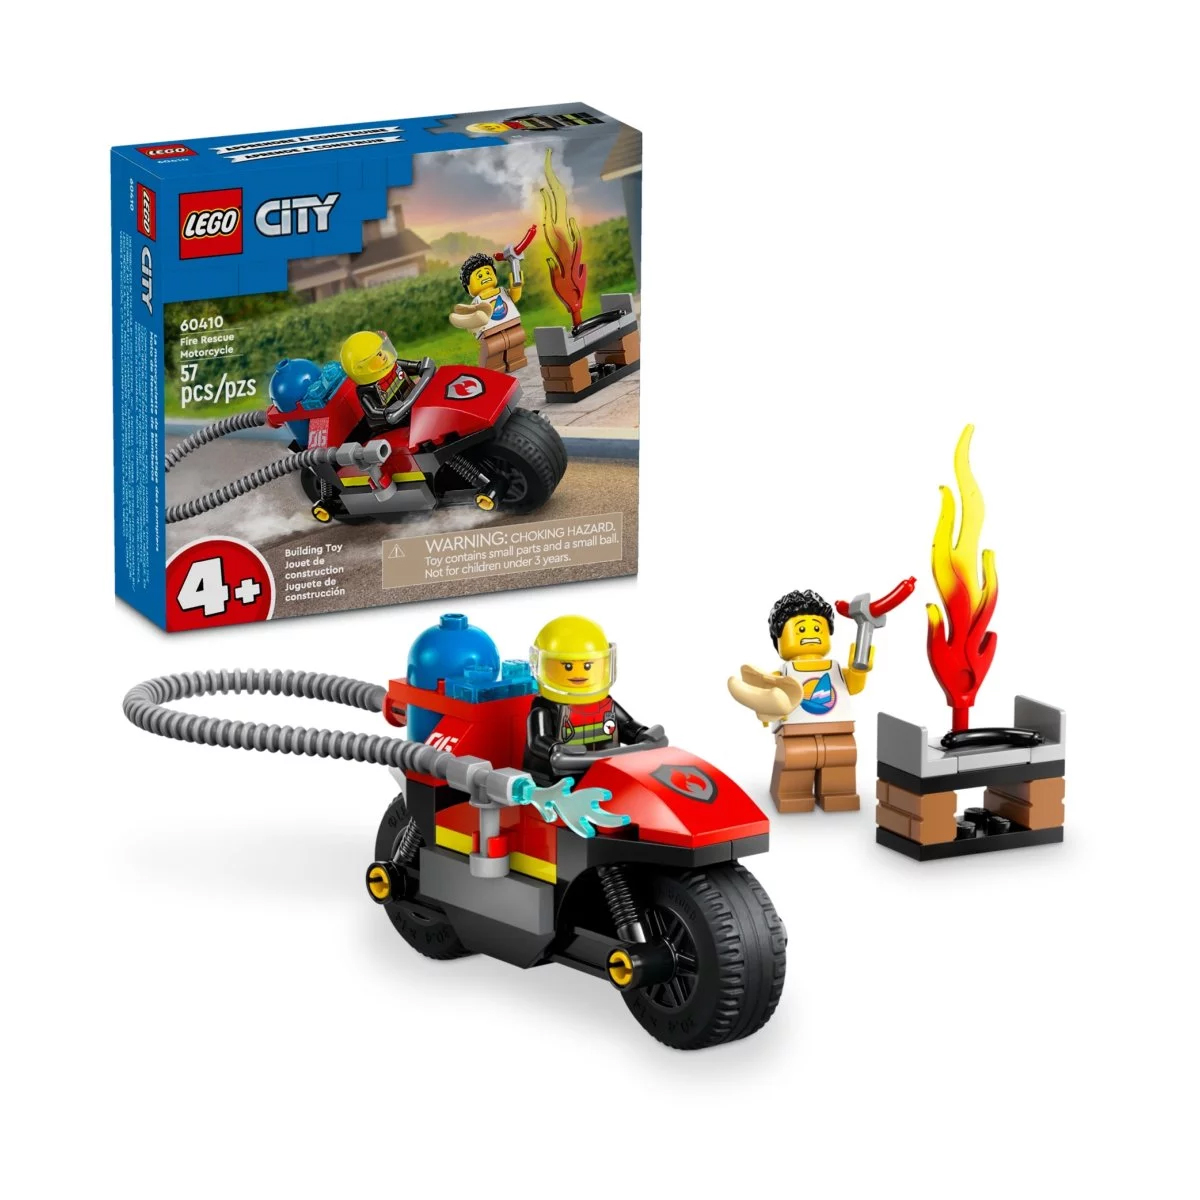 Конструктор Lego City Fire Rescue Motorcycle 60410, 57 деталей цена и фото